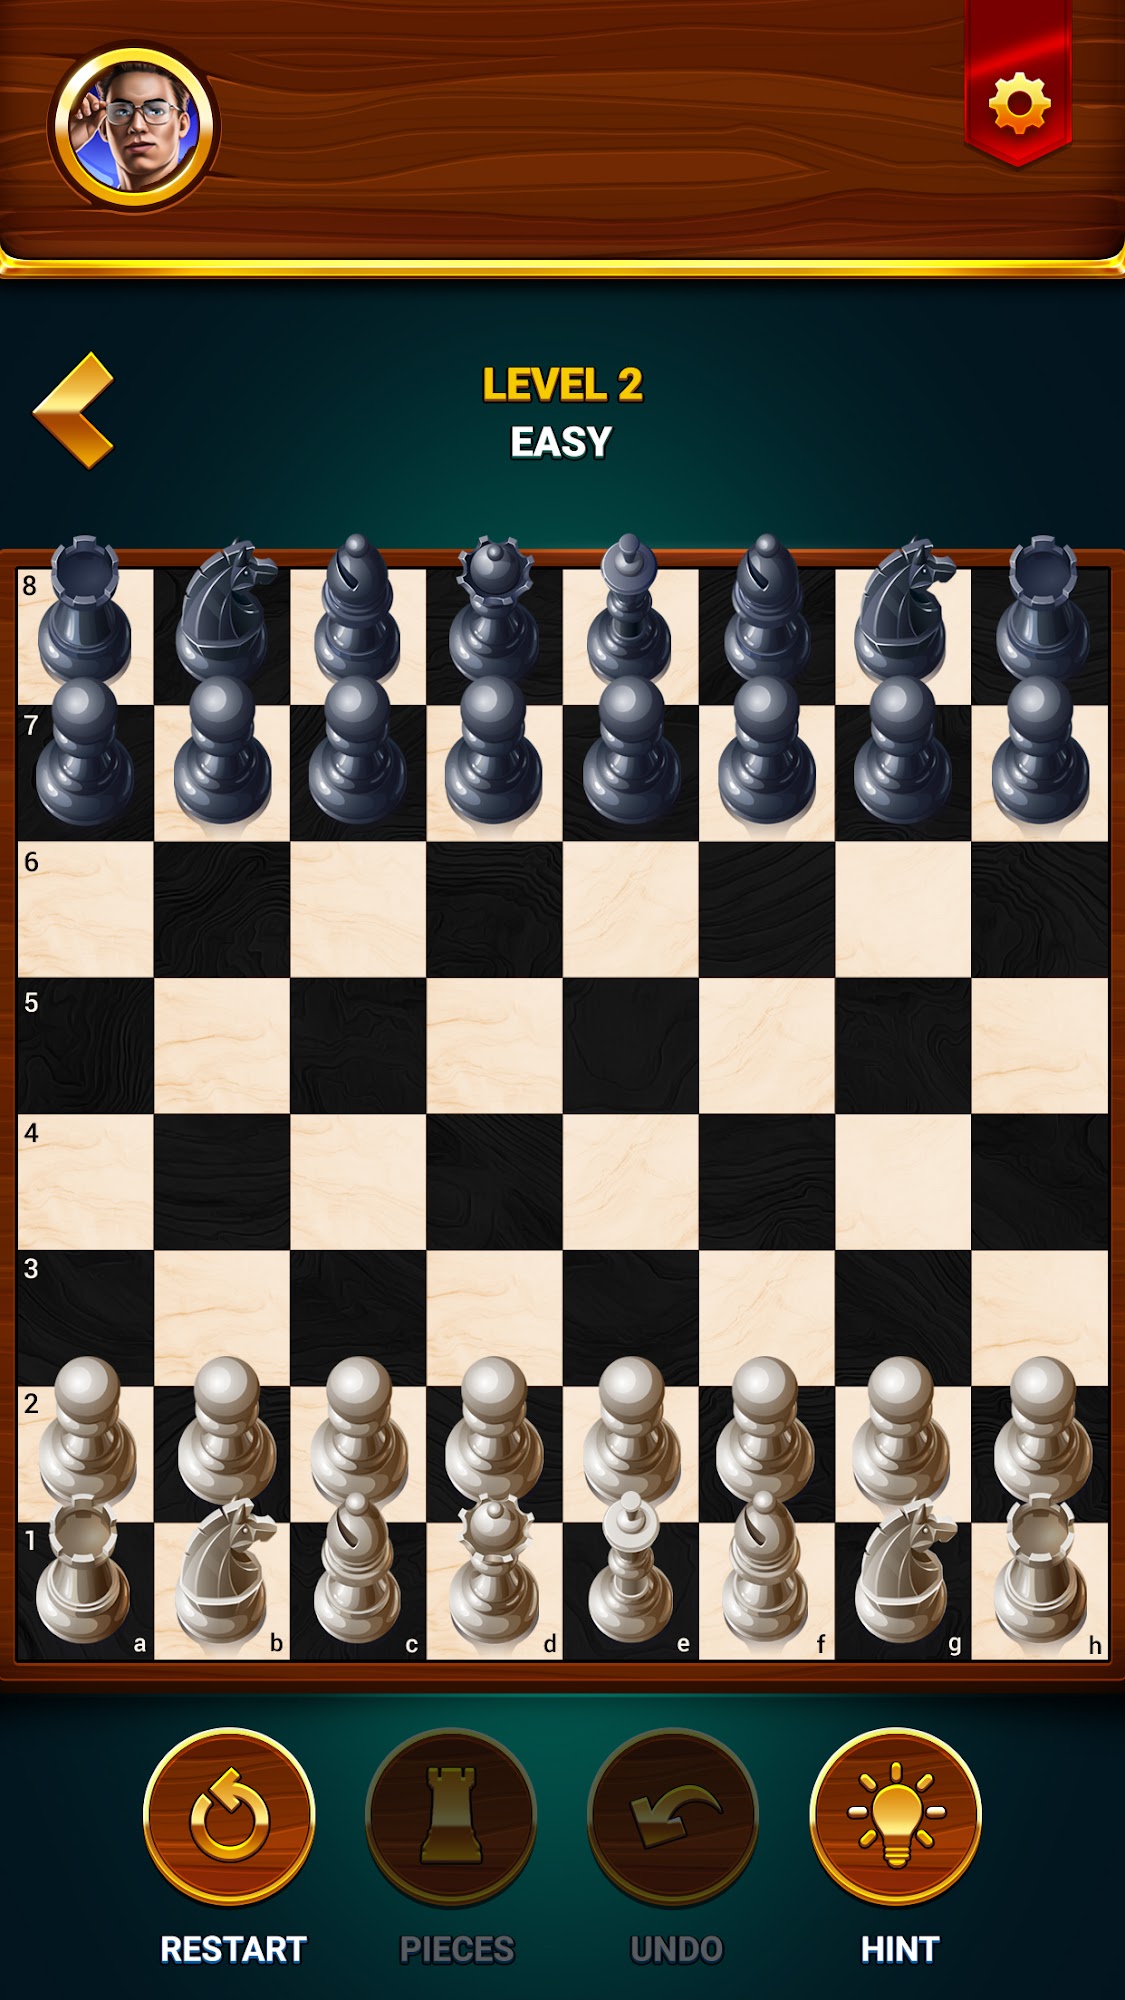 Download Chess Club - Chess Board Game für Android kostenlos.